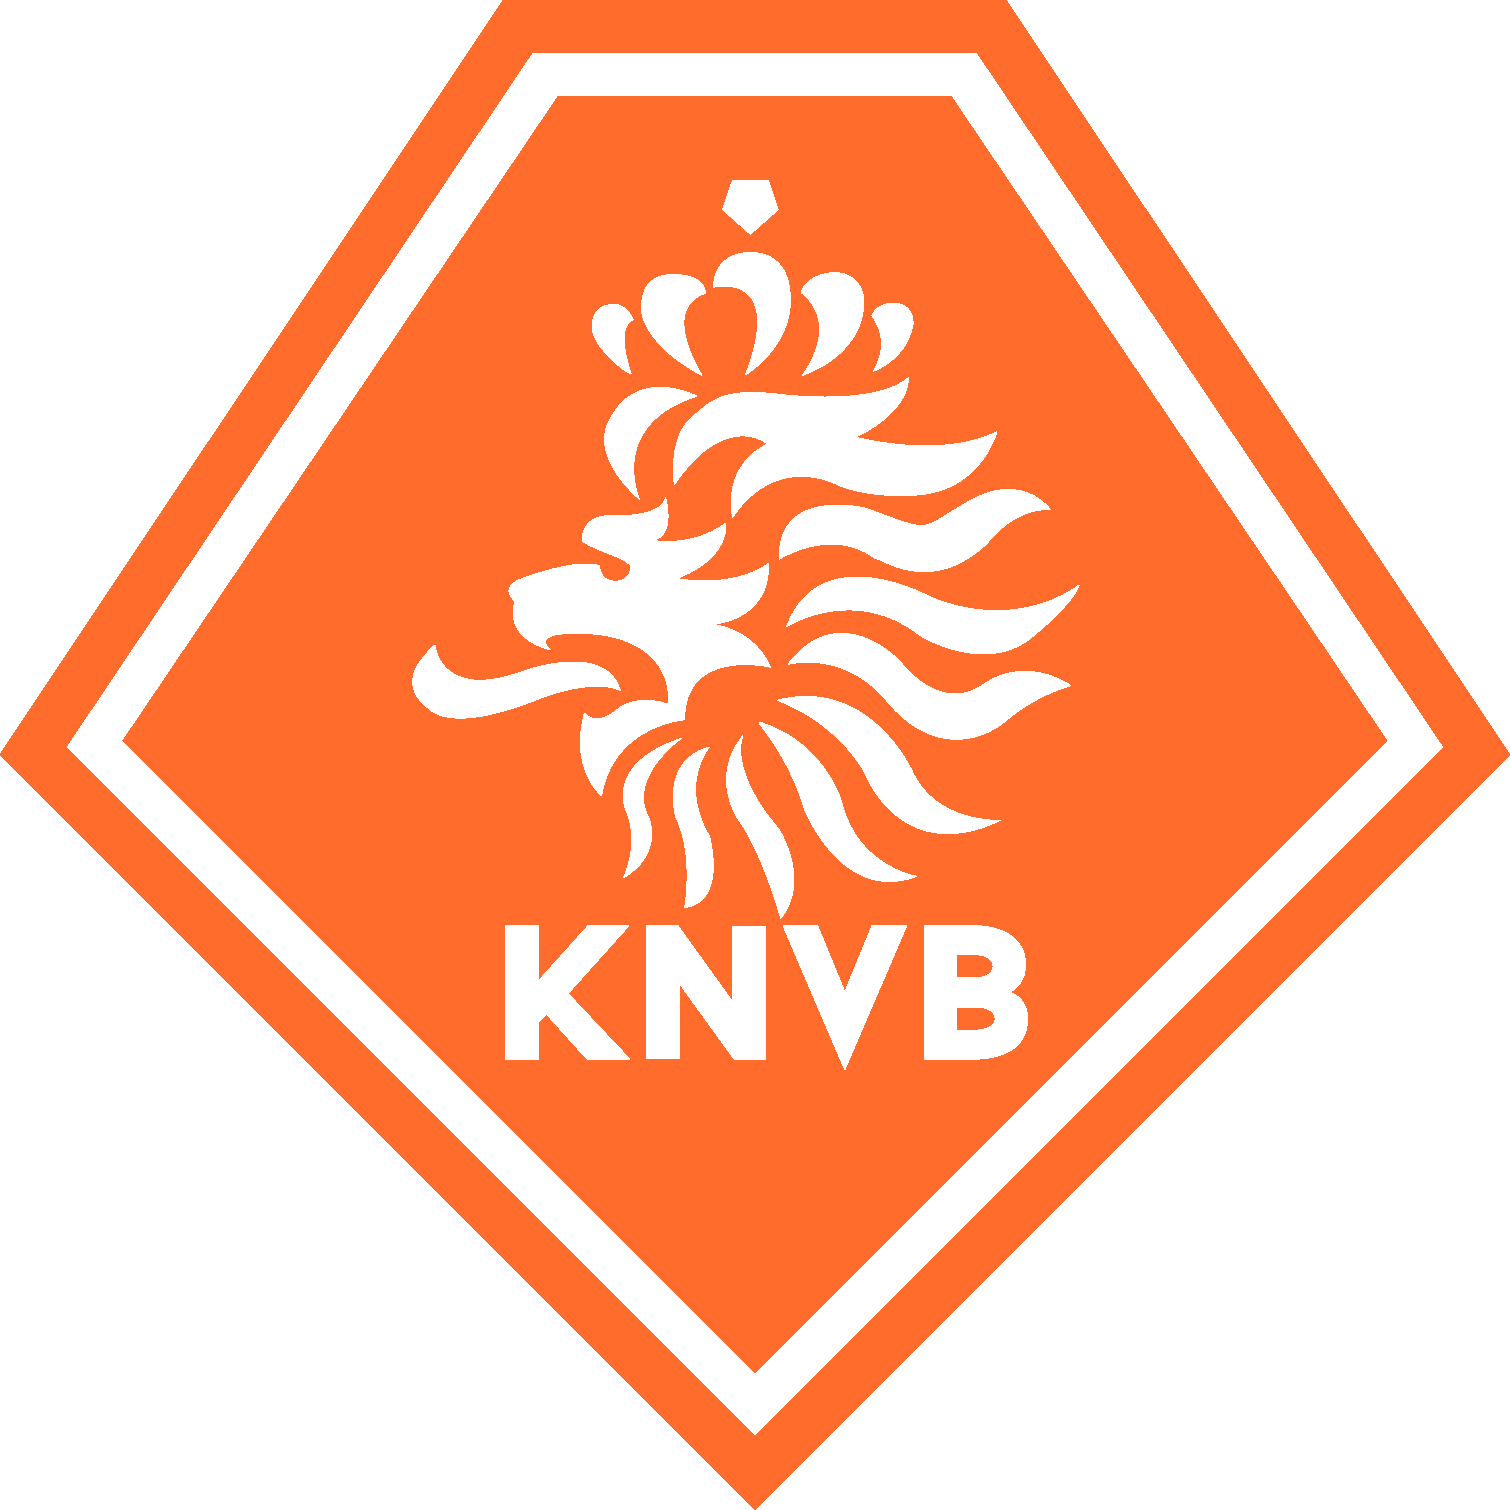 KNVB Logo   Royal Netherlands Football Association & National Team png